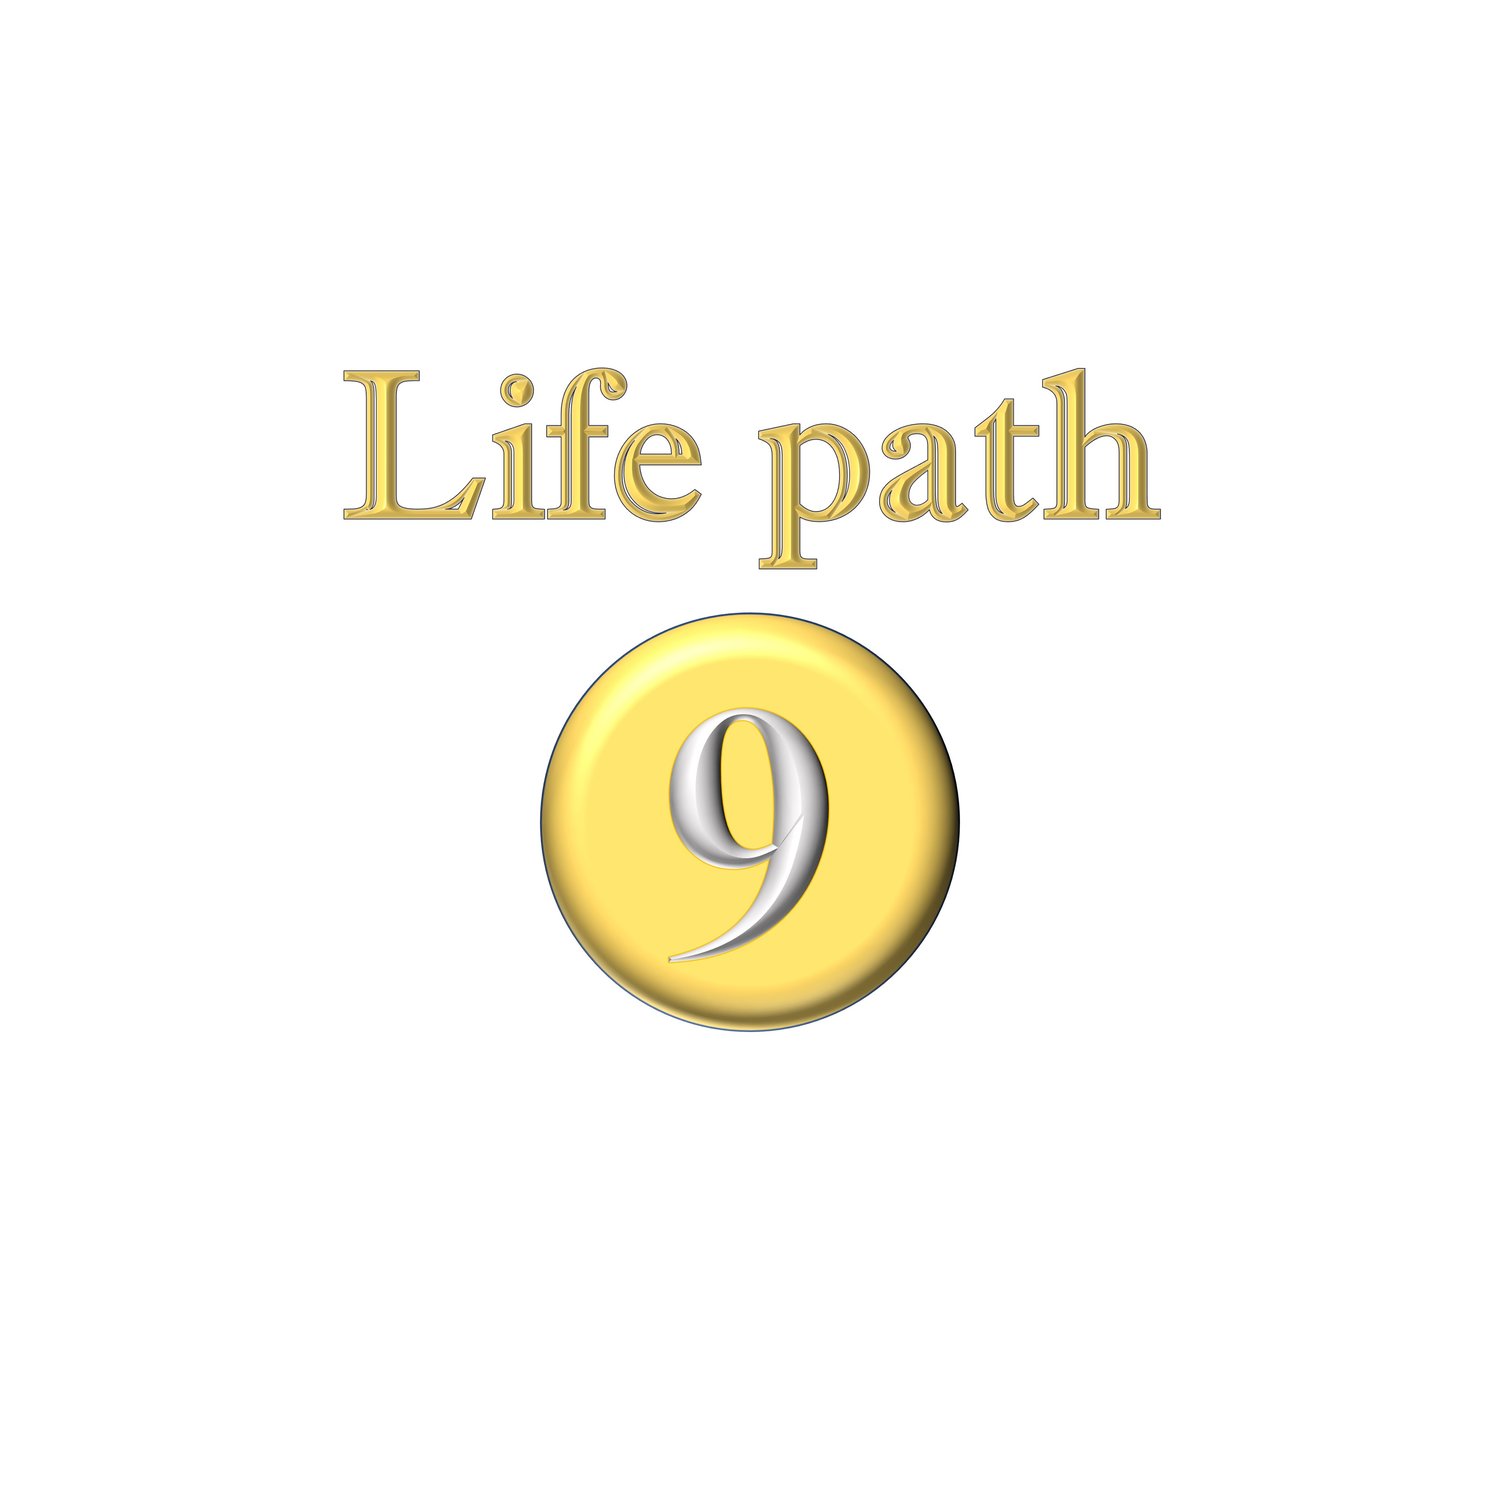 Life path 9